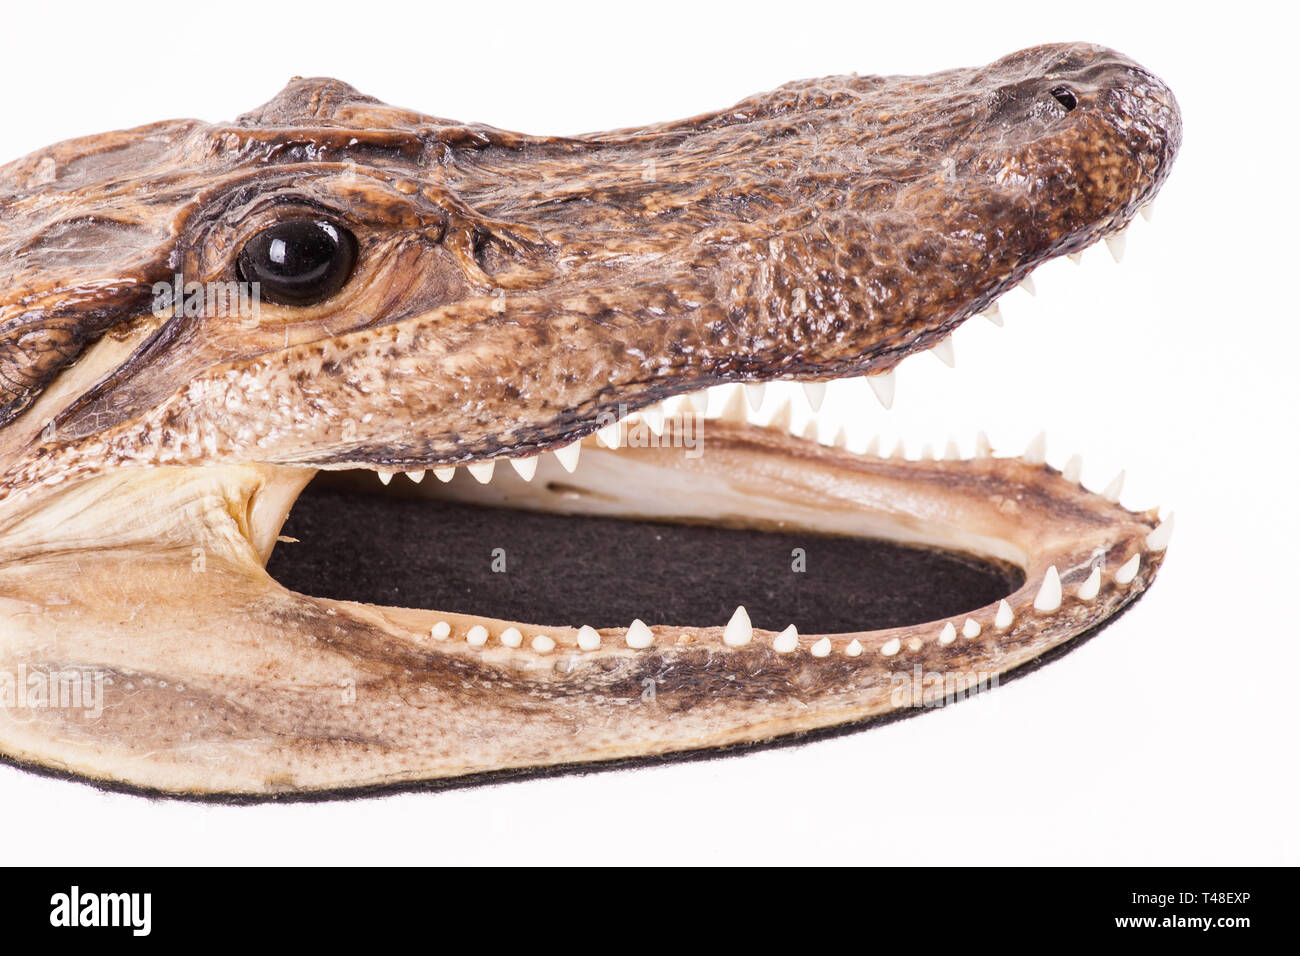 Erhaltene krokodil Kopf - isoliert Stockfoto